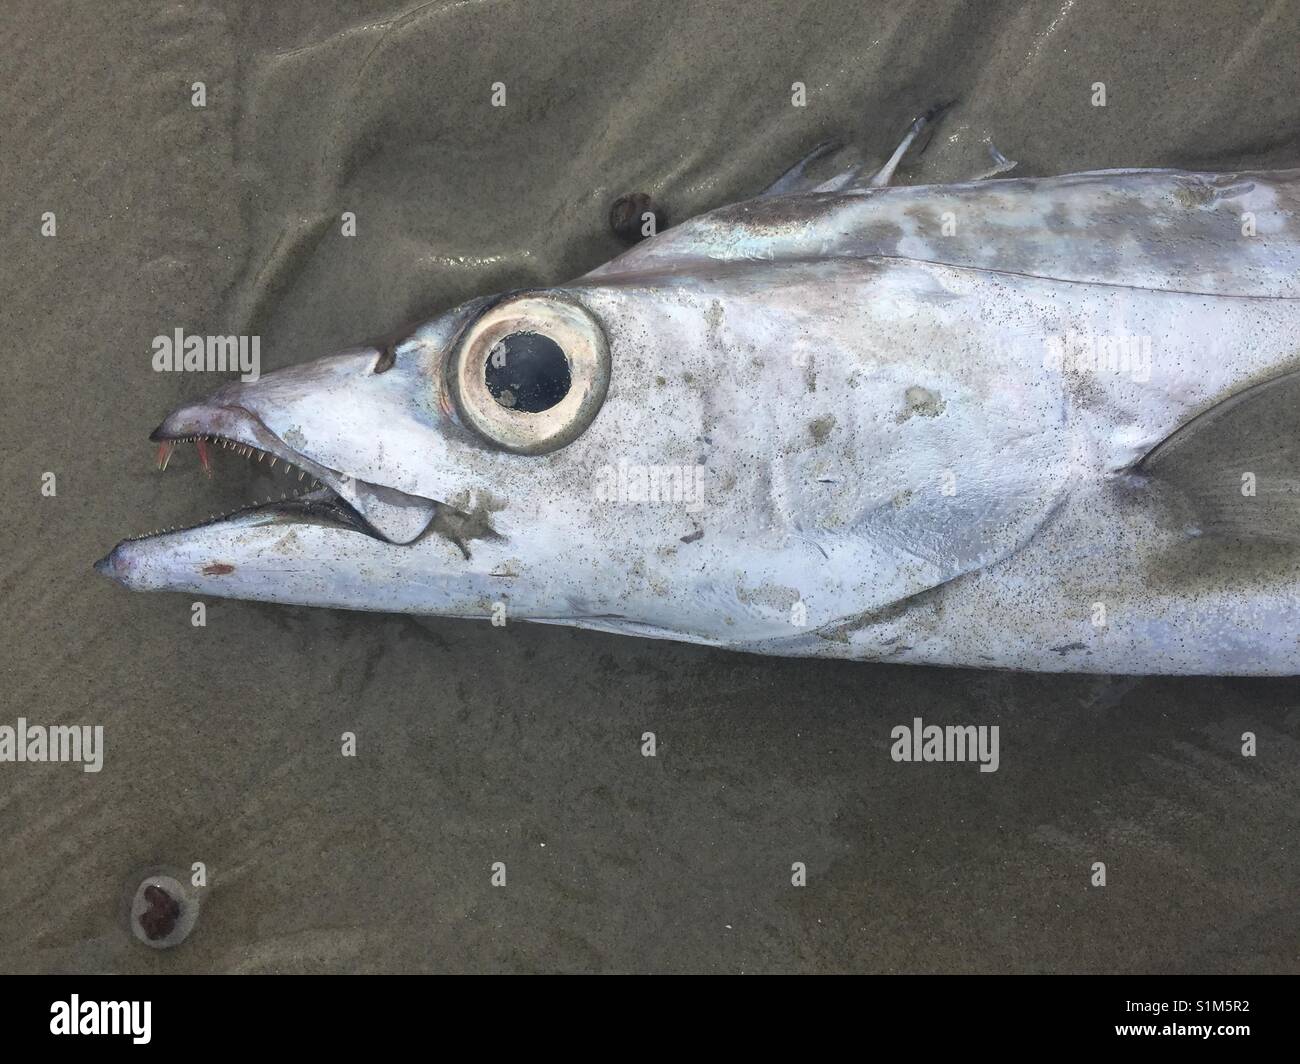 Deep sea fish washed up on beach Stock Photo